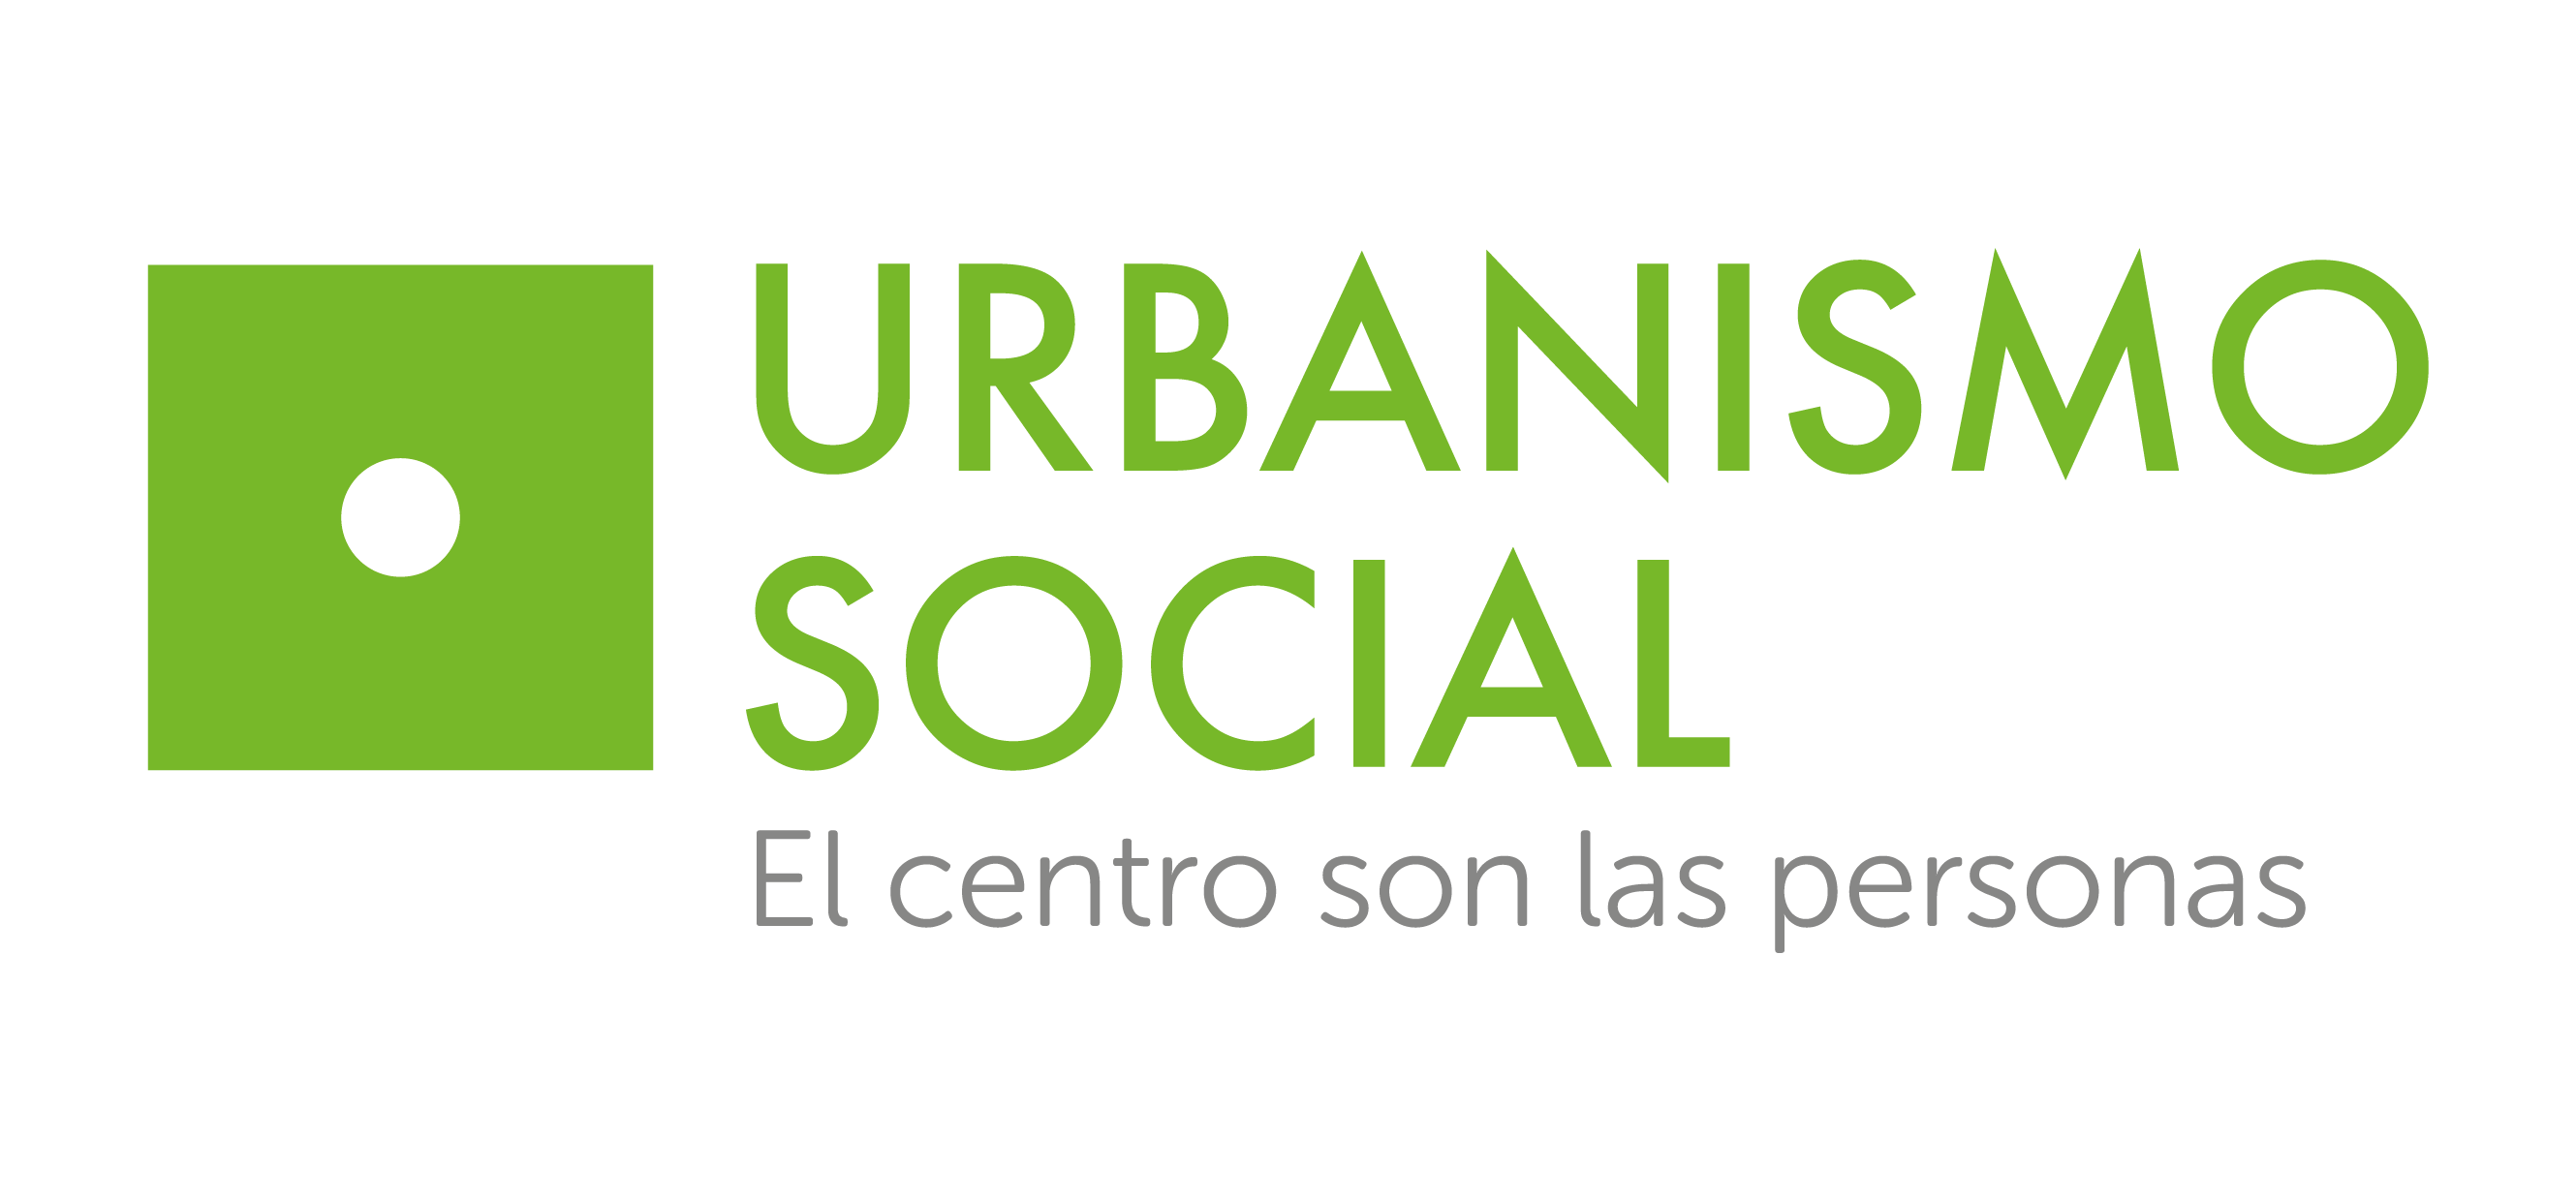 Urbanismo Social